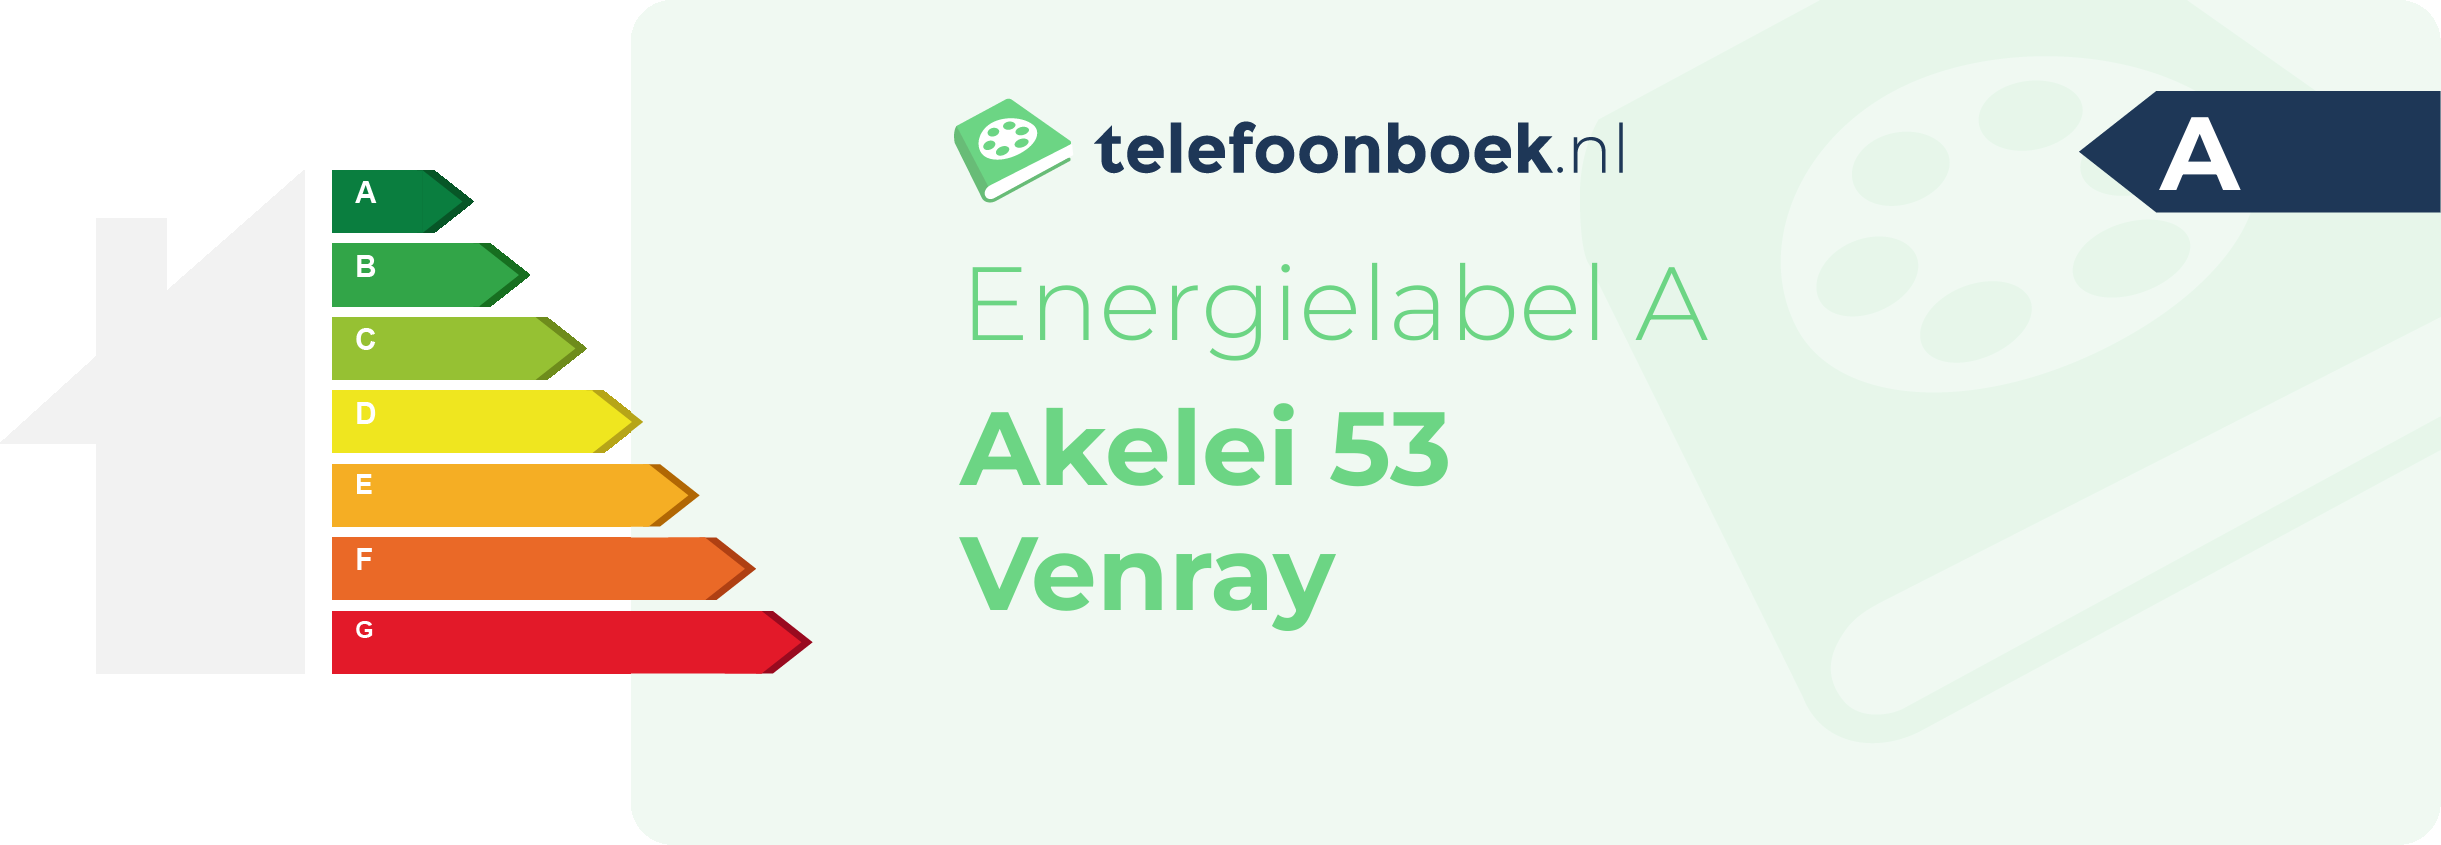 Energielabel Akelei 53 Venray